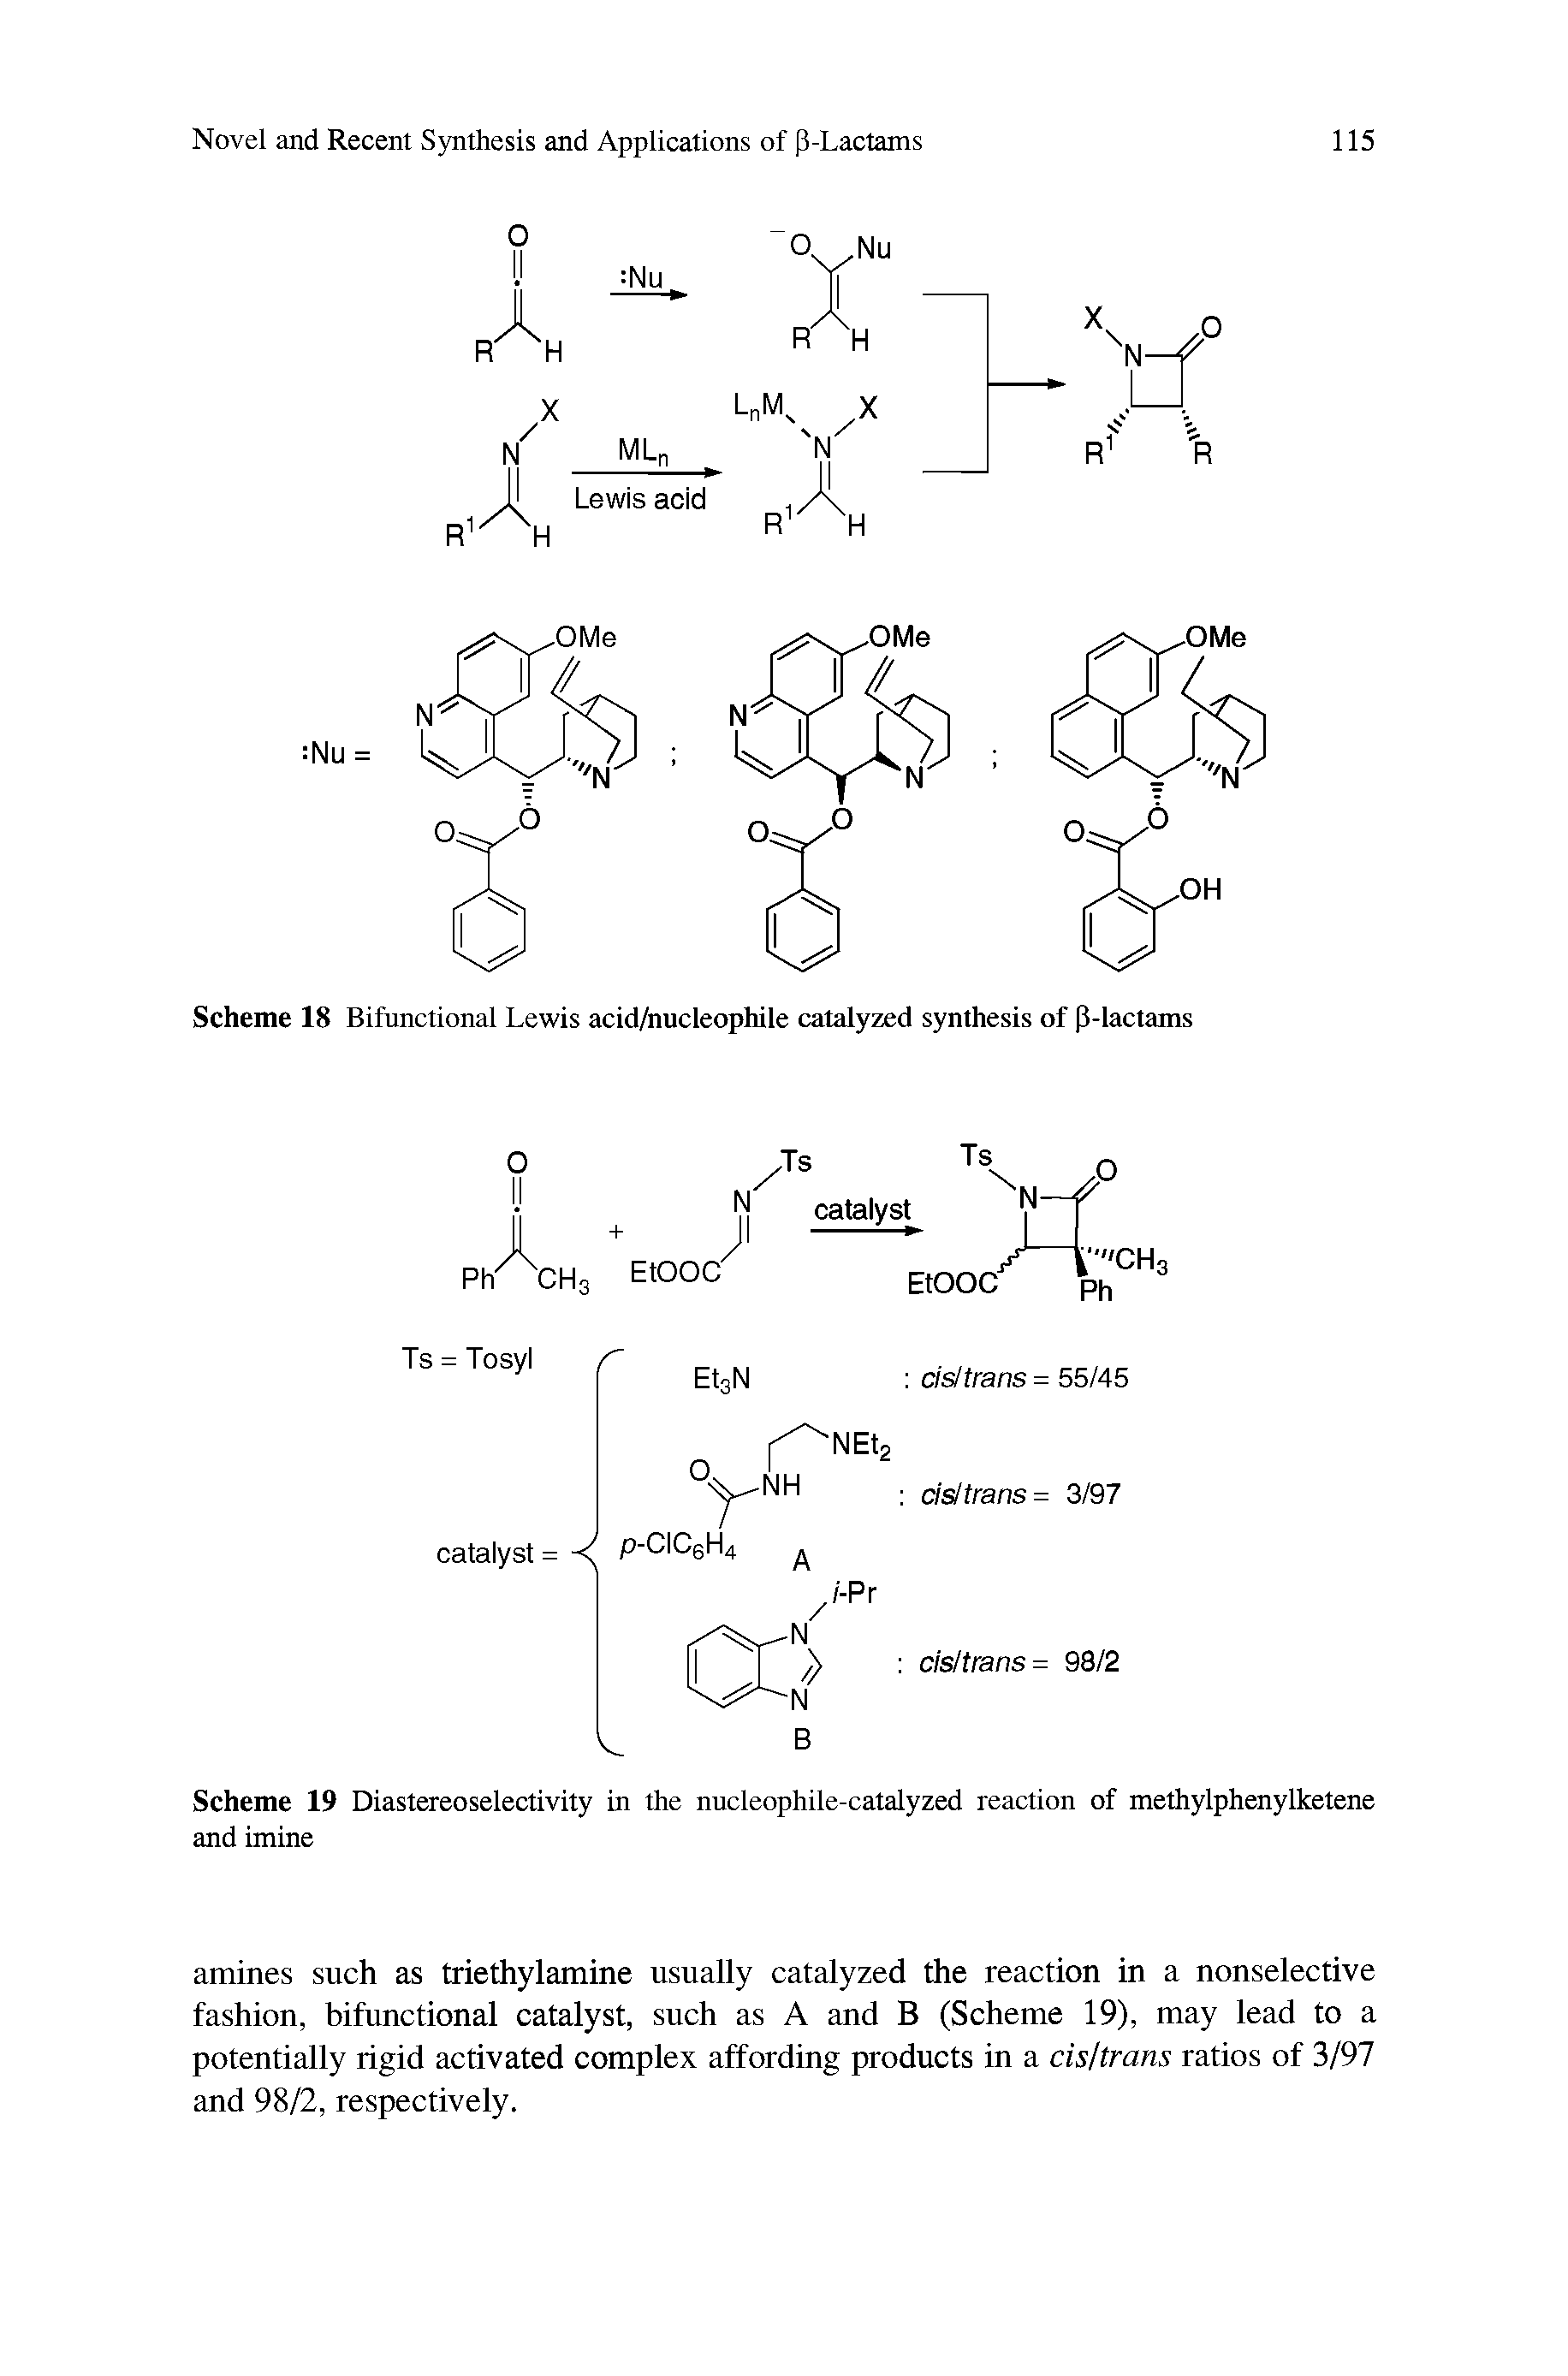 Scheme 18 Bifunctional Lewis acid/nucleophile catalyzed synthesis of P-lactams...